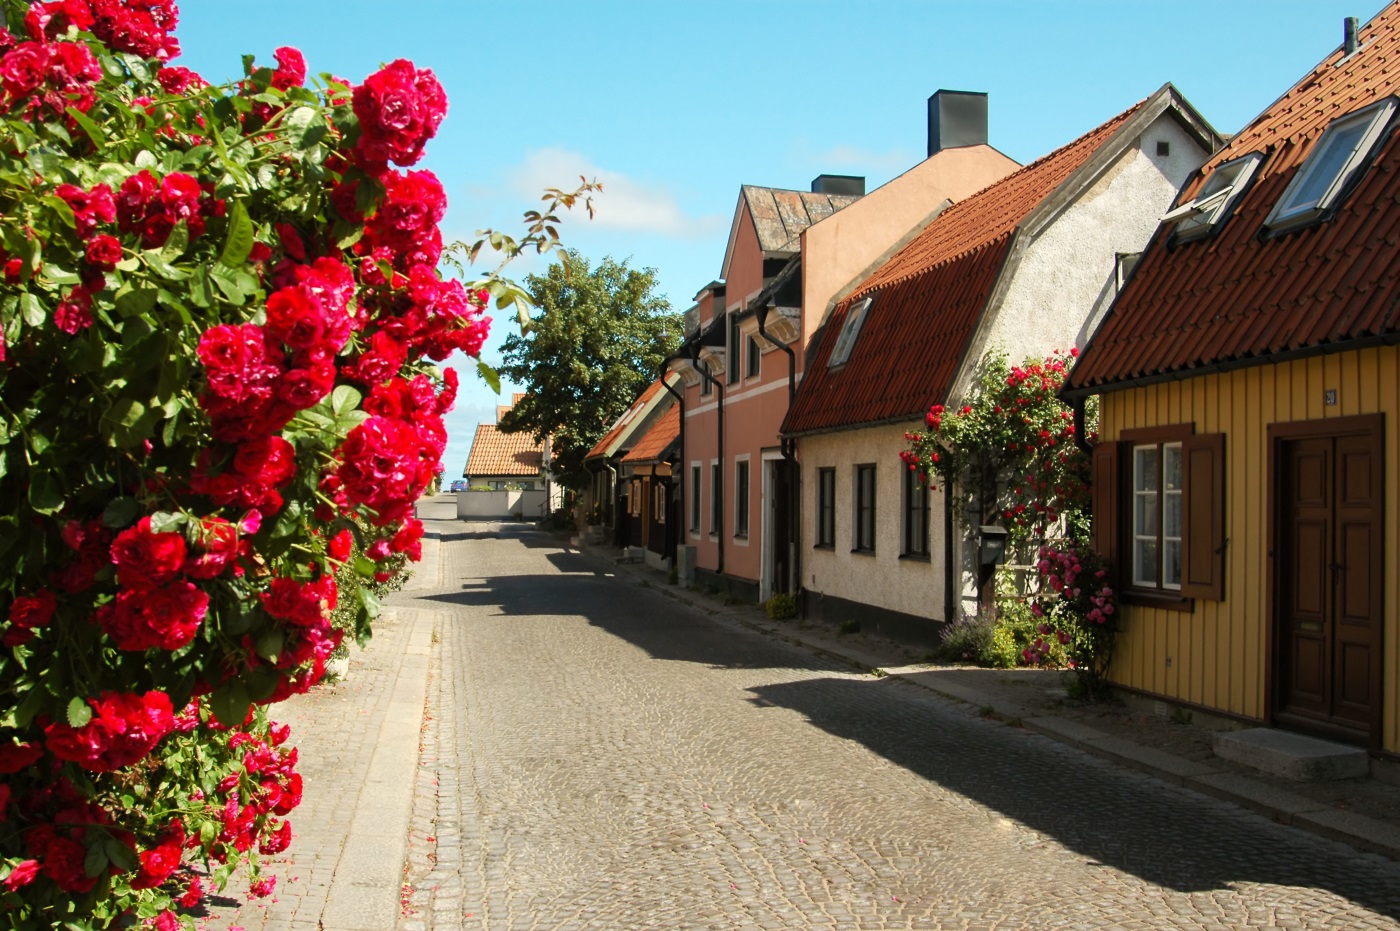 ingsva.fi Visby - Rosornas stad, Gotland